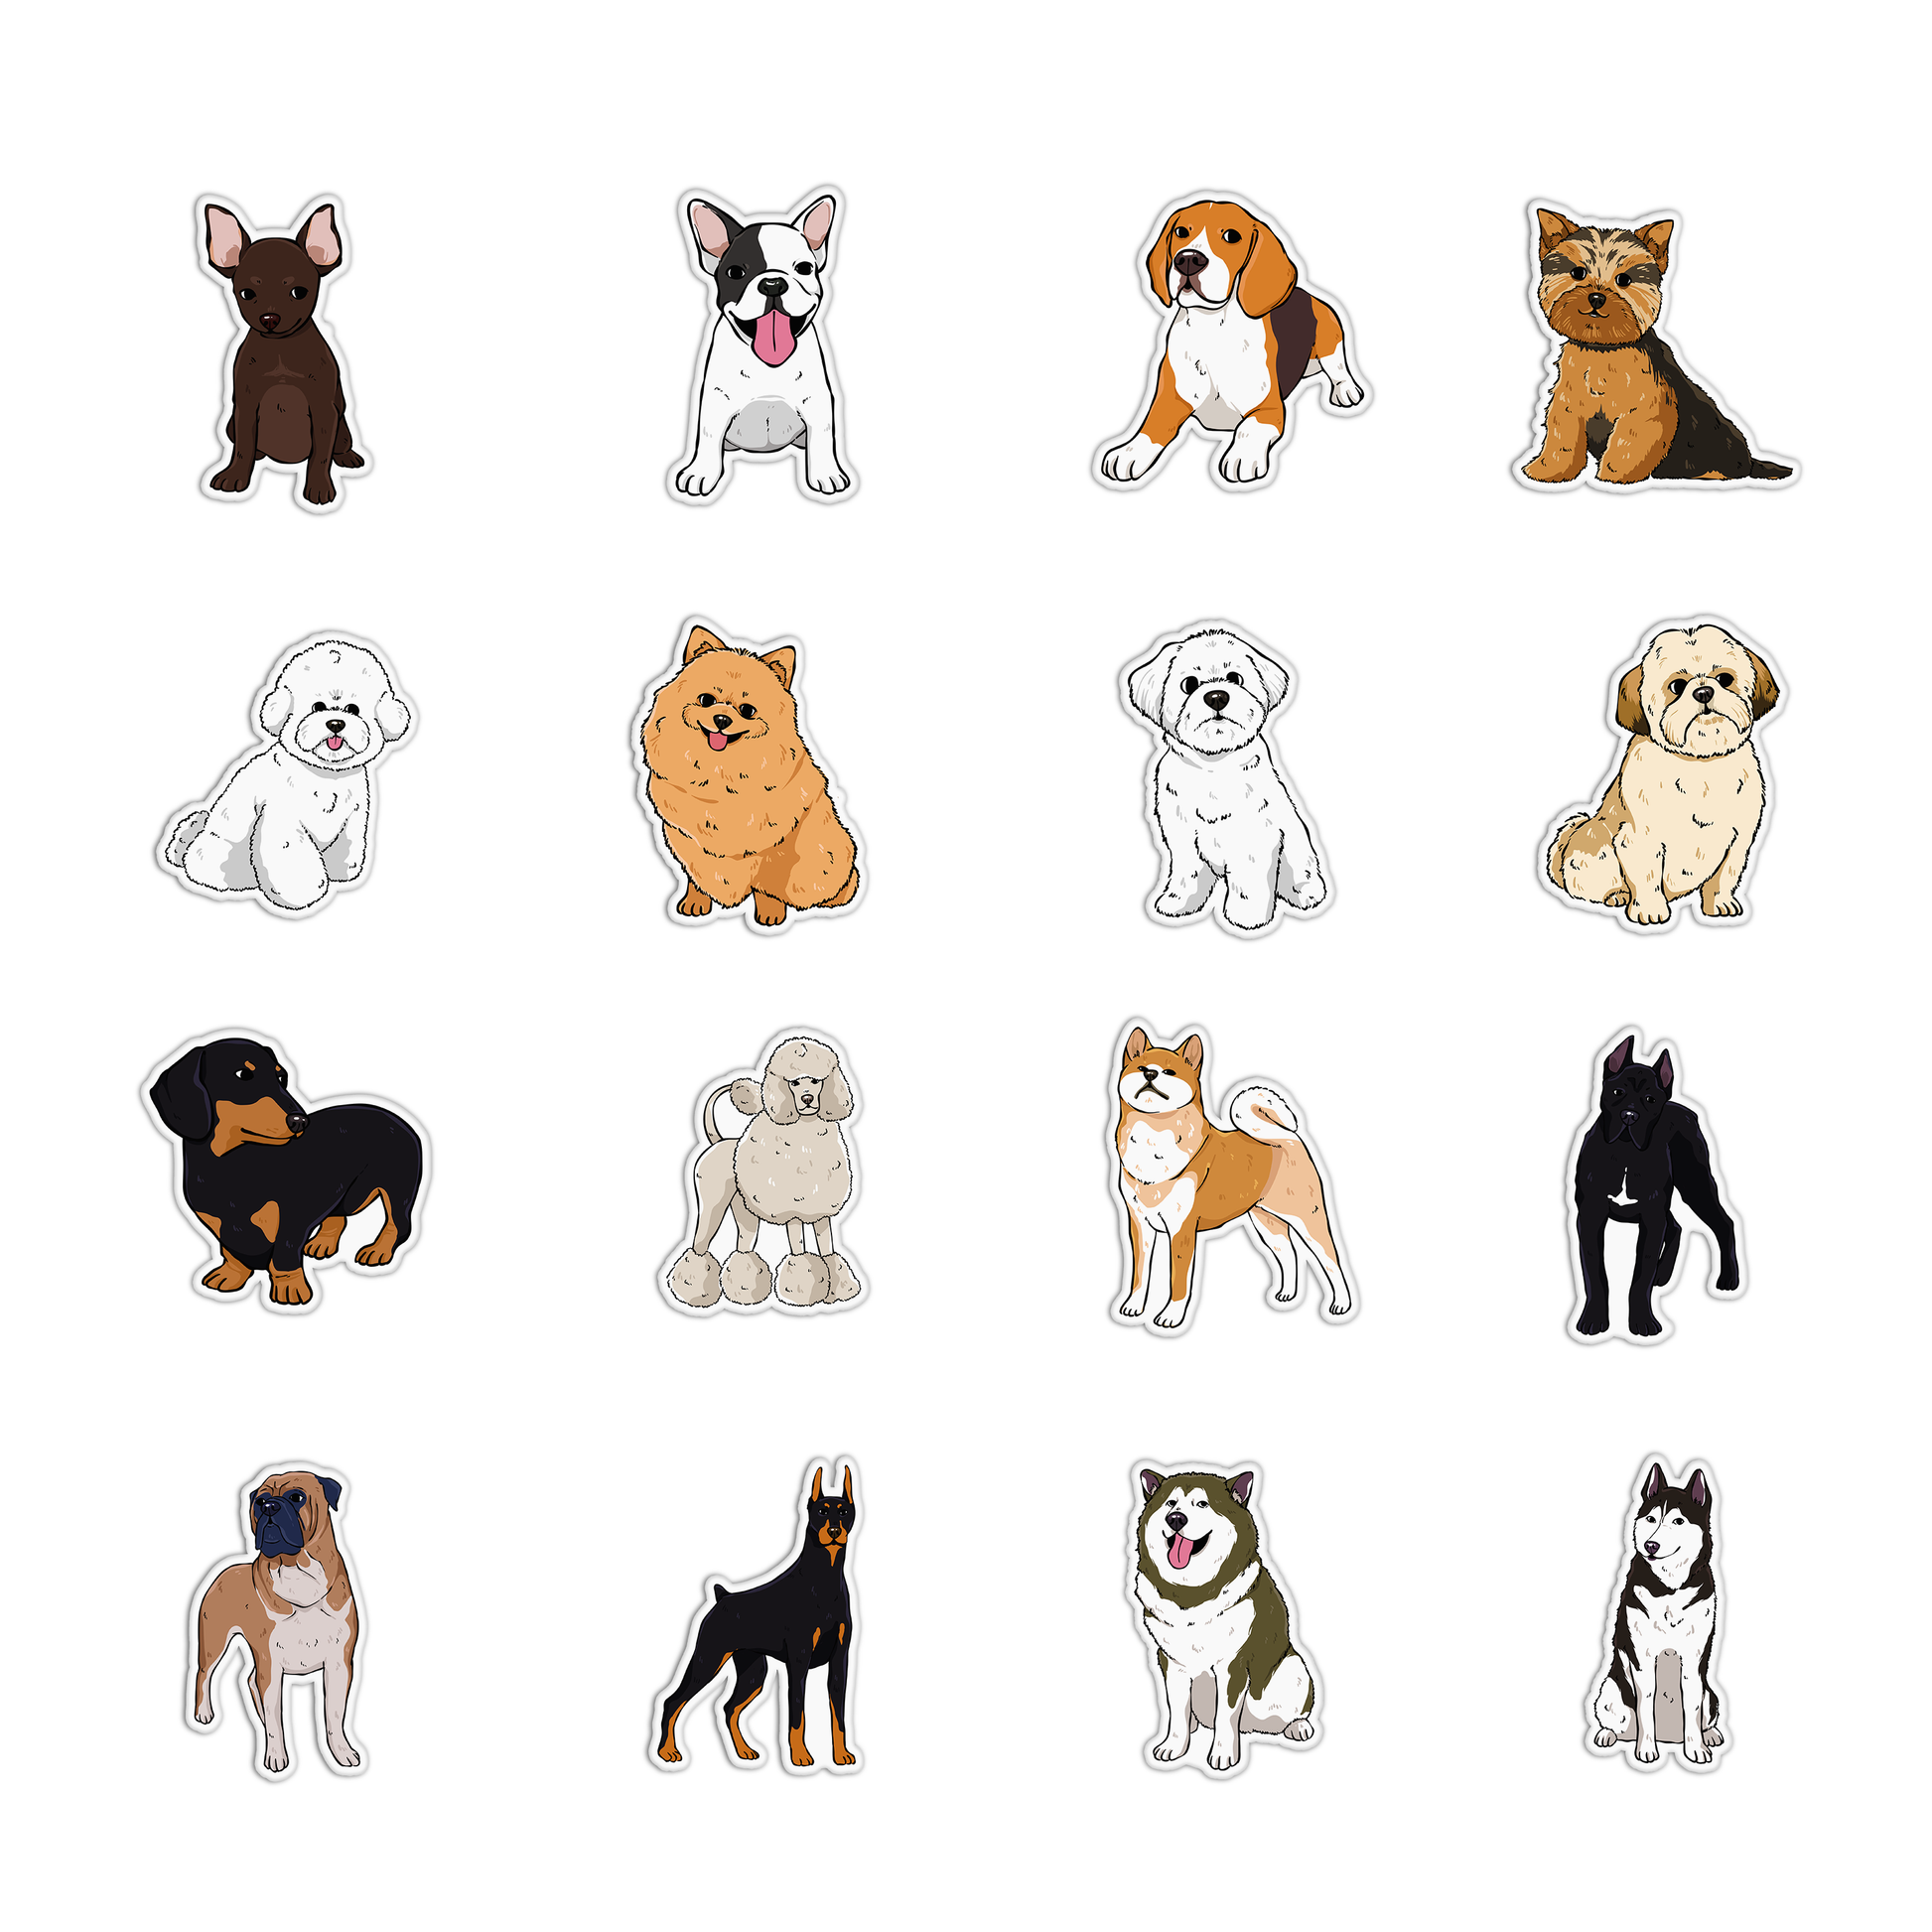 Dog Sticker Pack